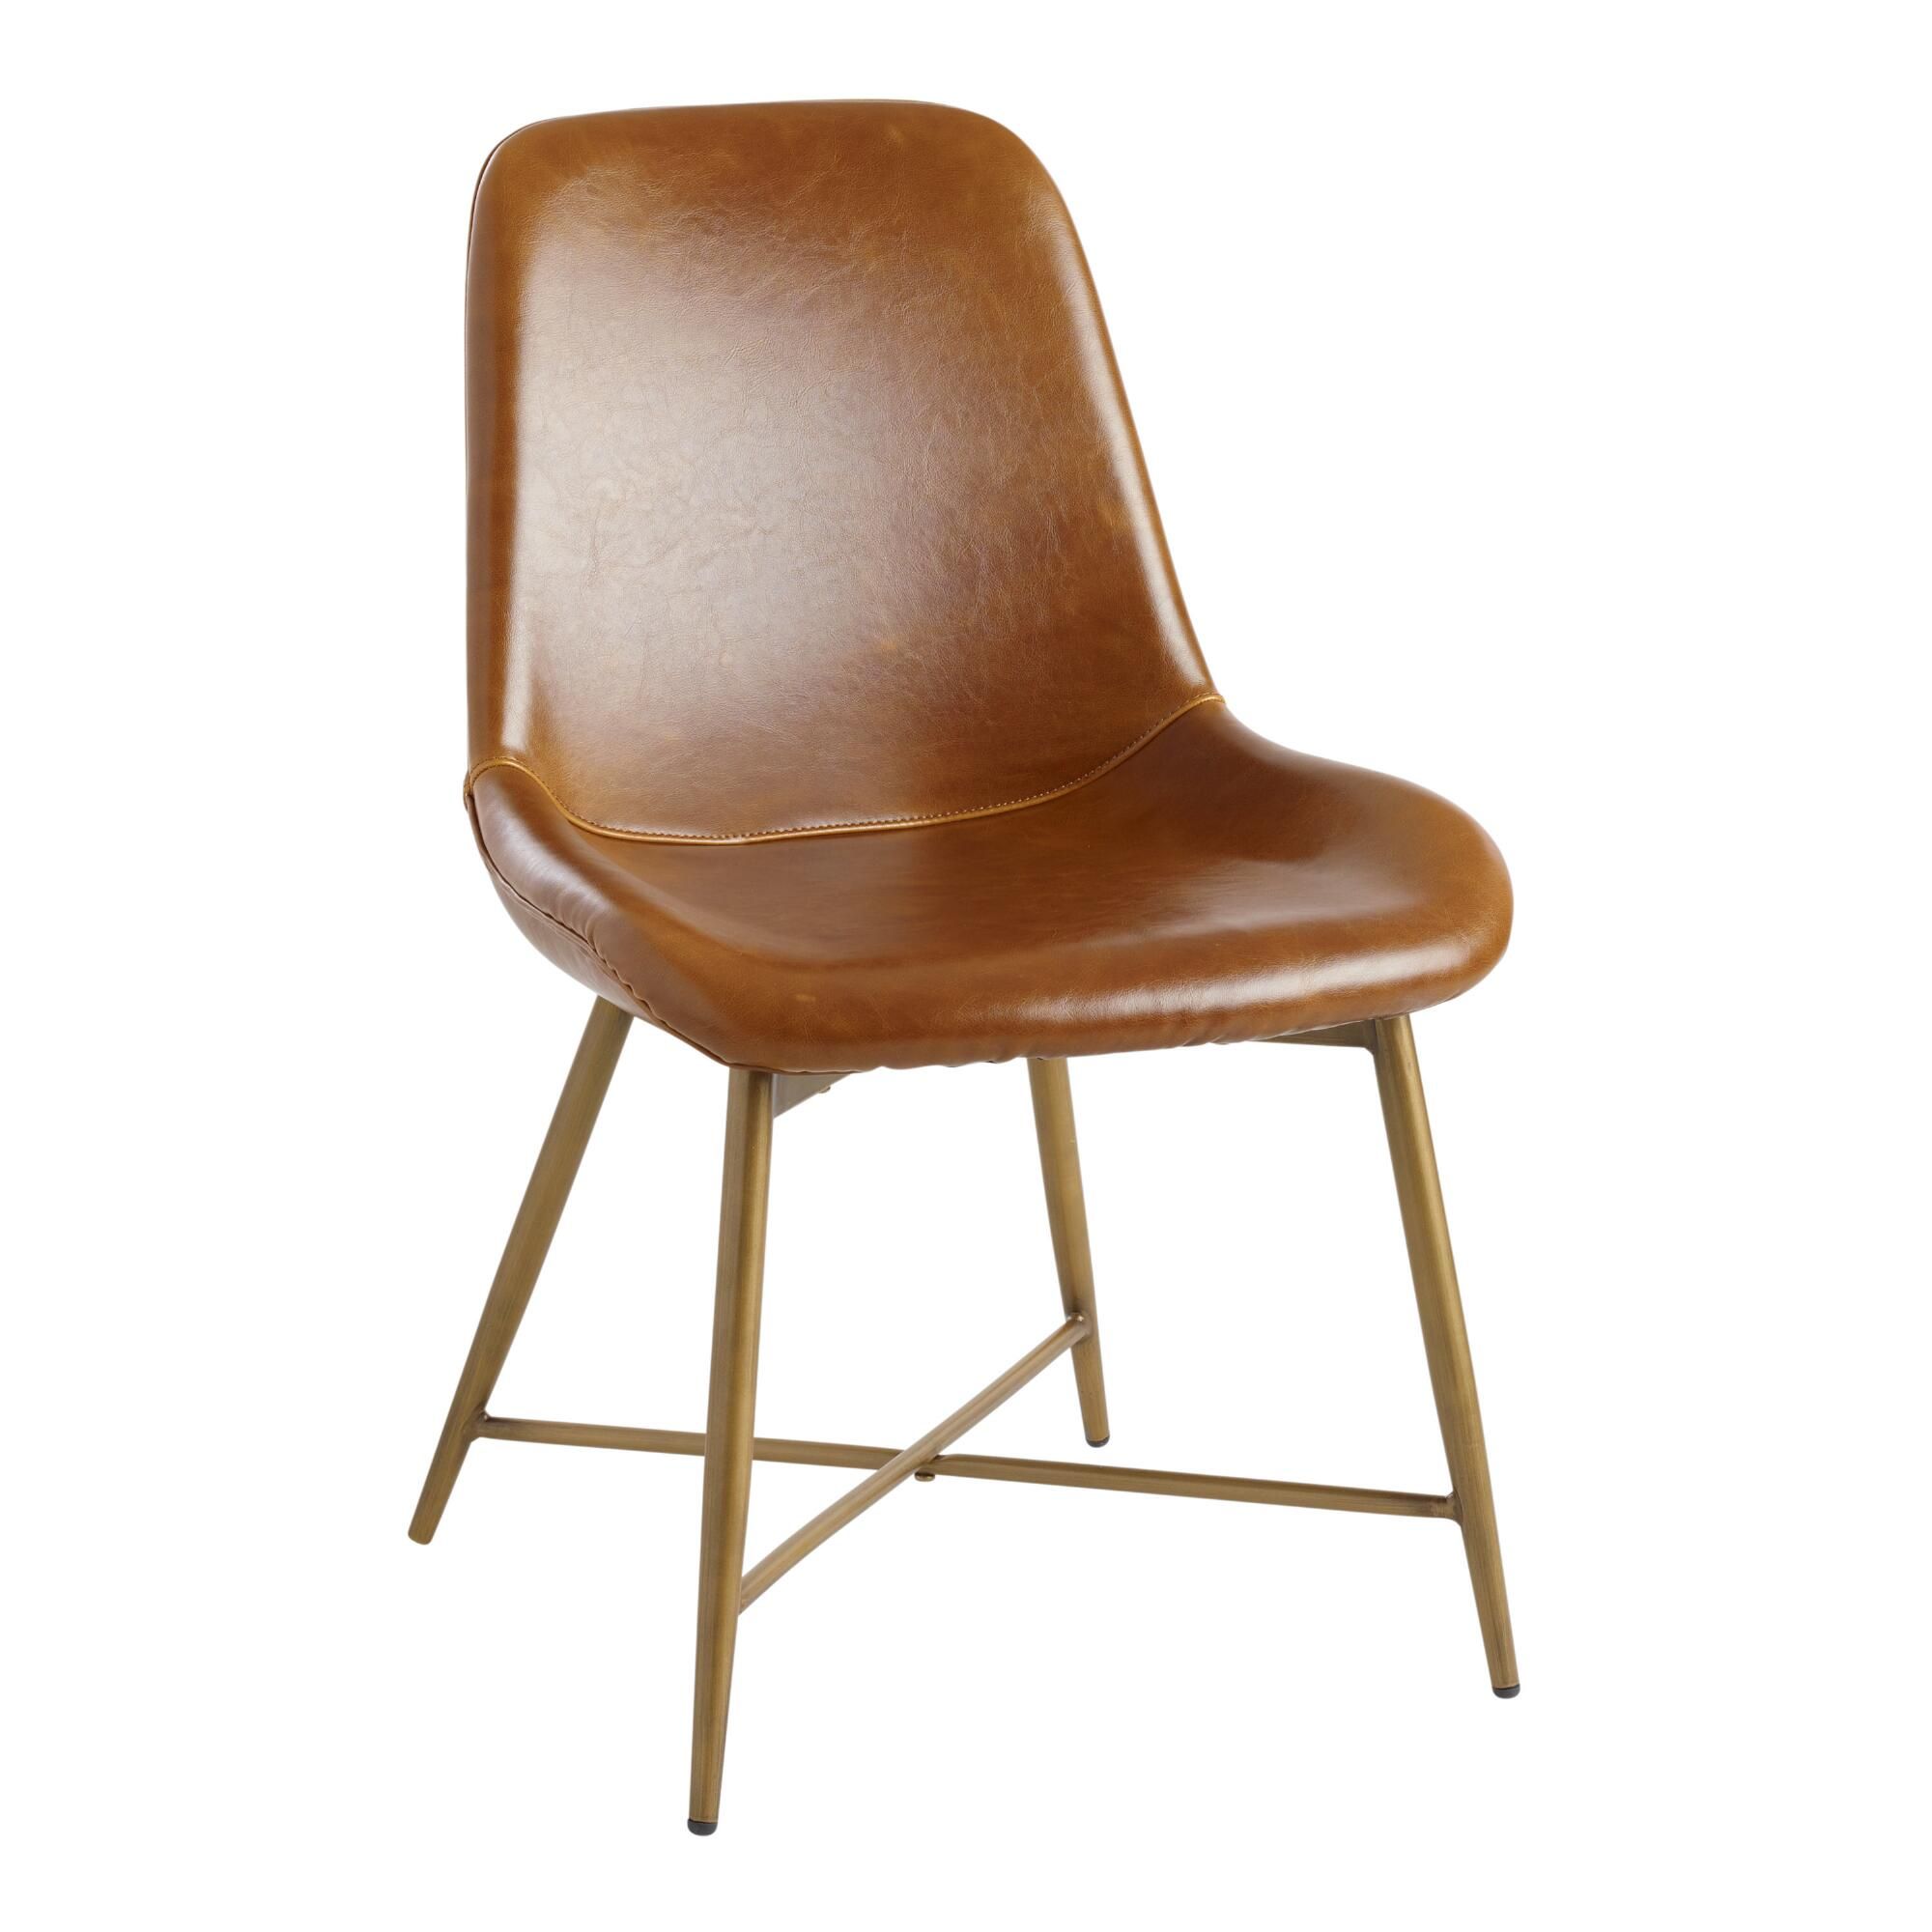 Bi Cast Leather Tyler Molded Chair Set of 2 by World Market | World Market